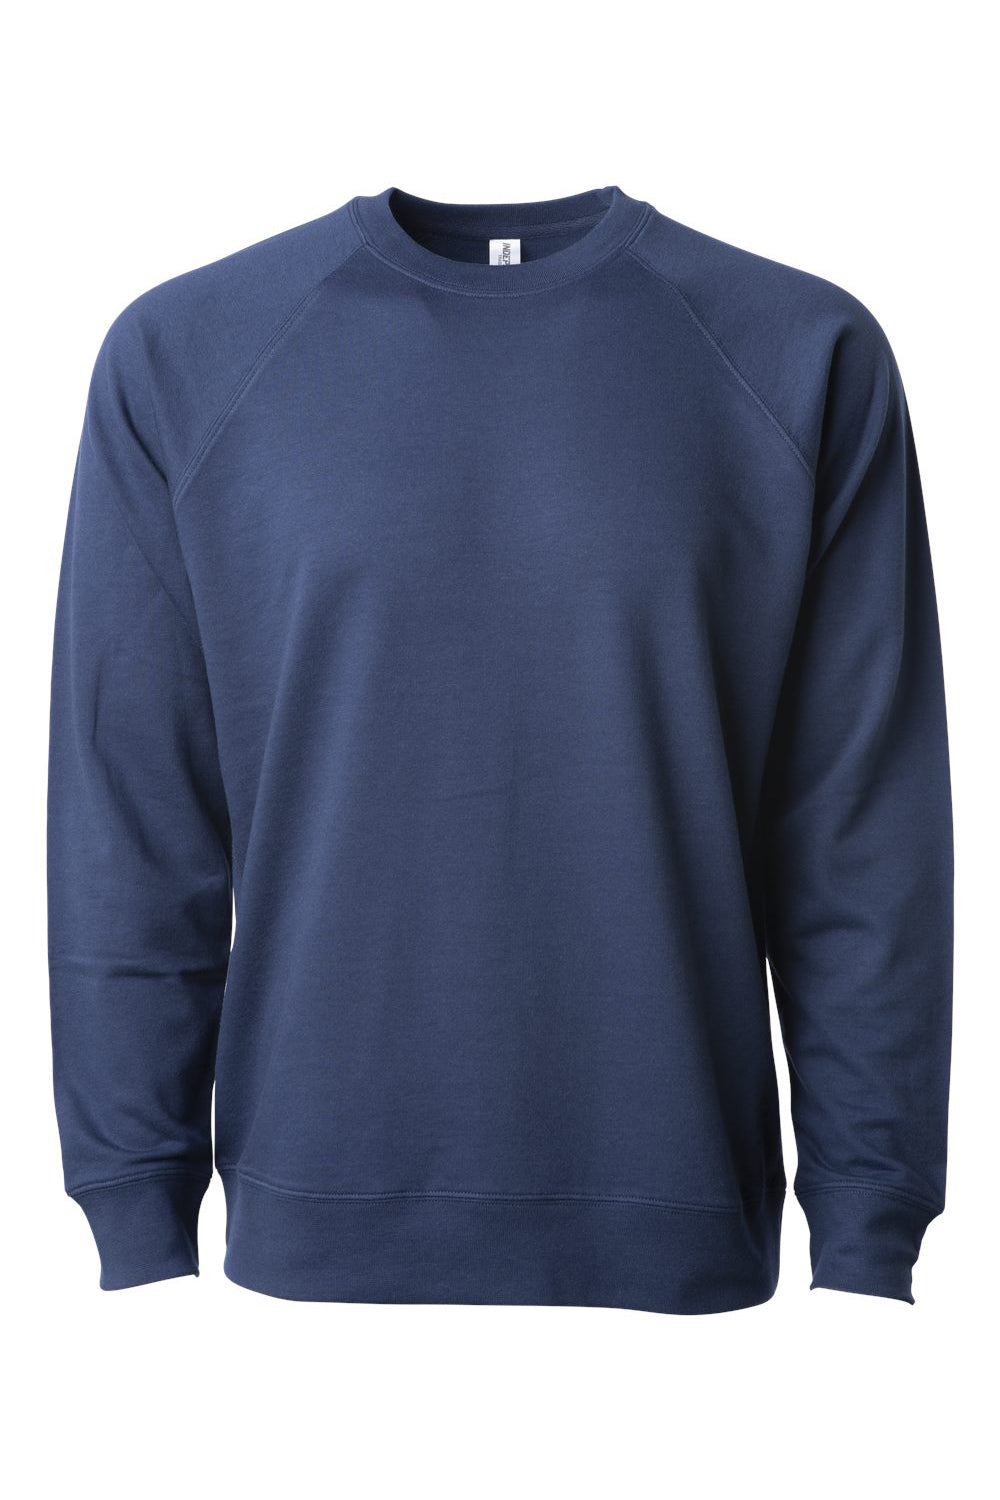 Independent Trading Co. SS1000C Mens Icon Loopback Terry Crewneck Sweatshirt Indigo Blue Flat Front